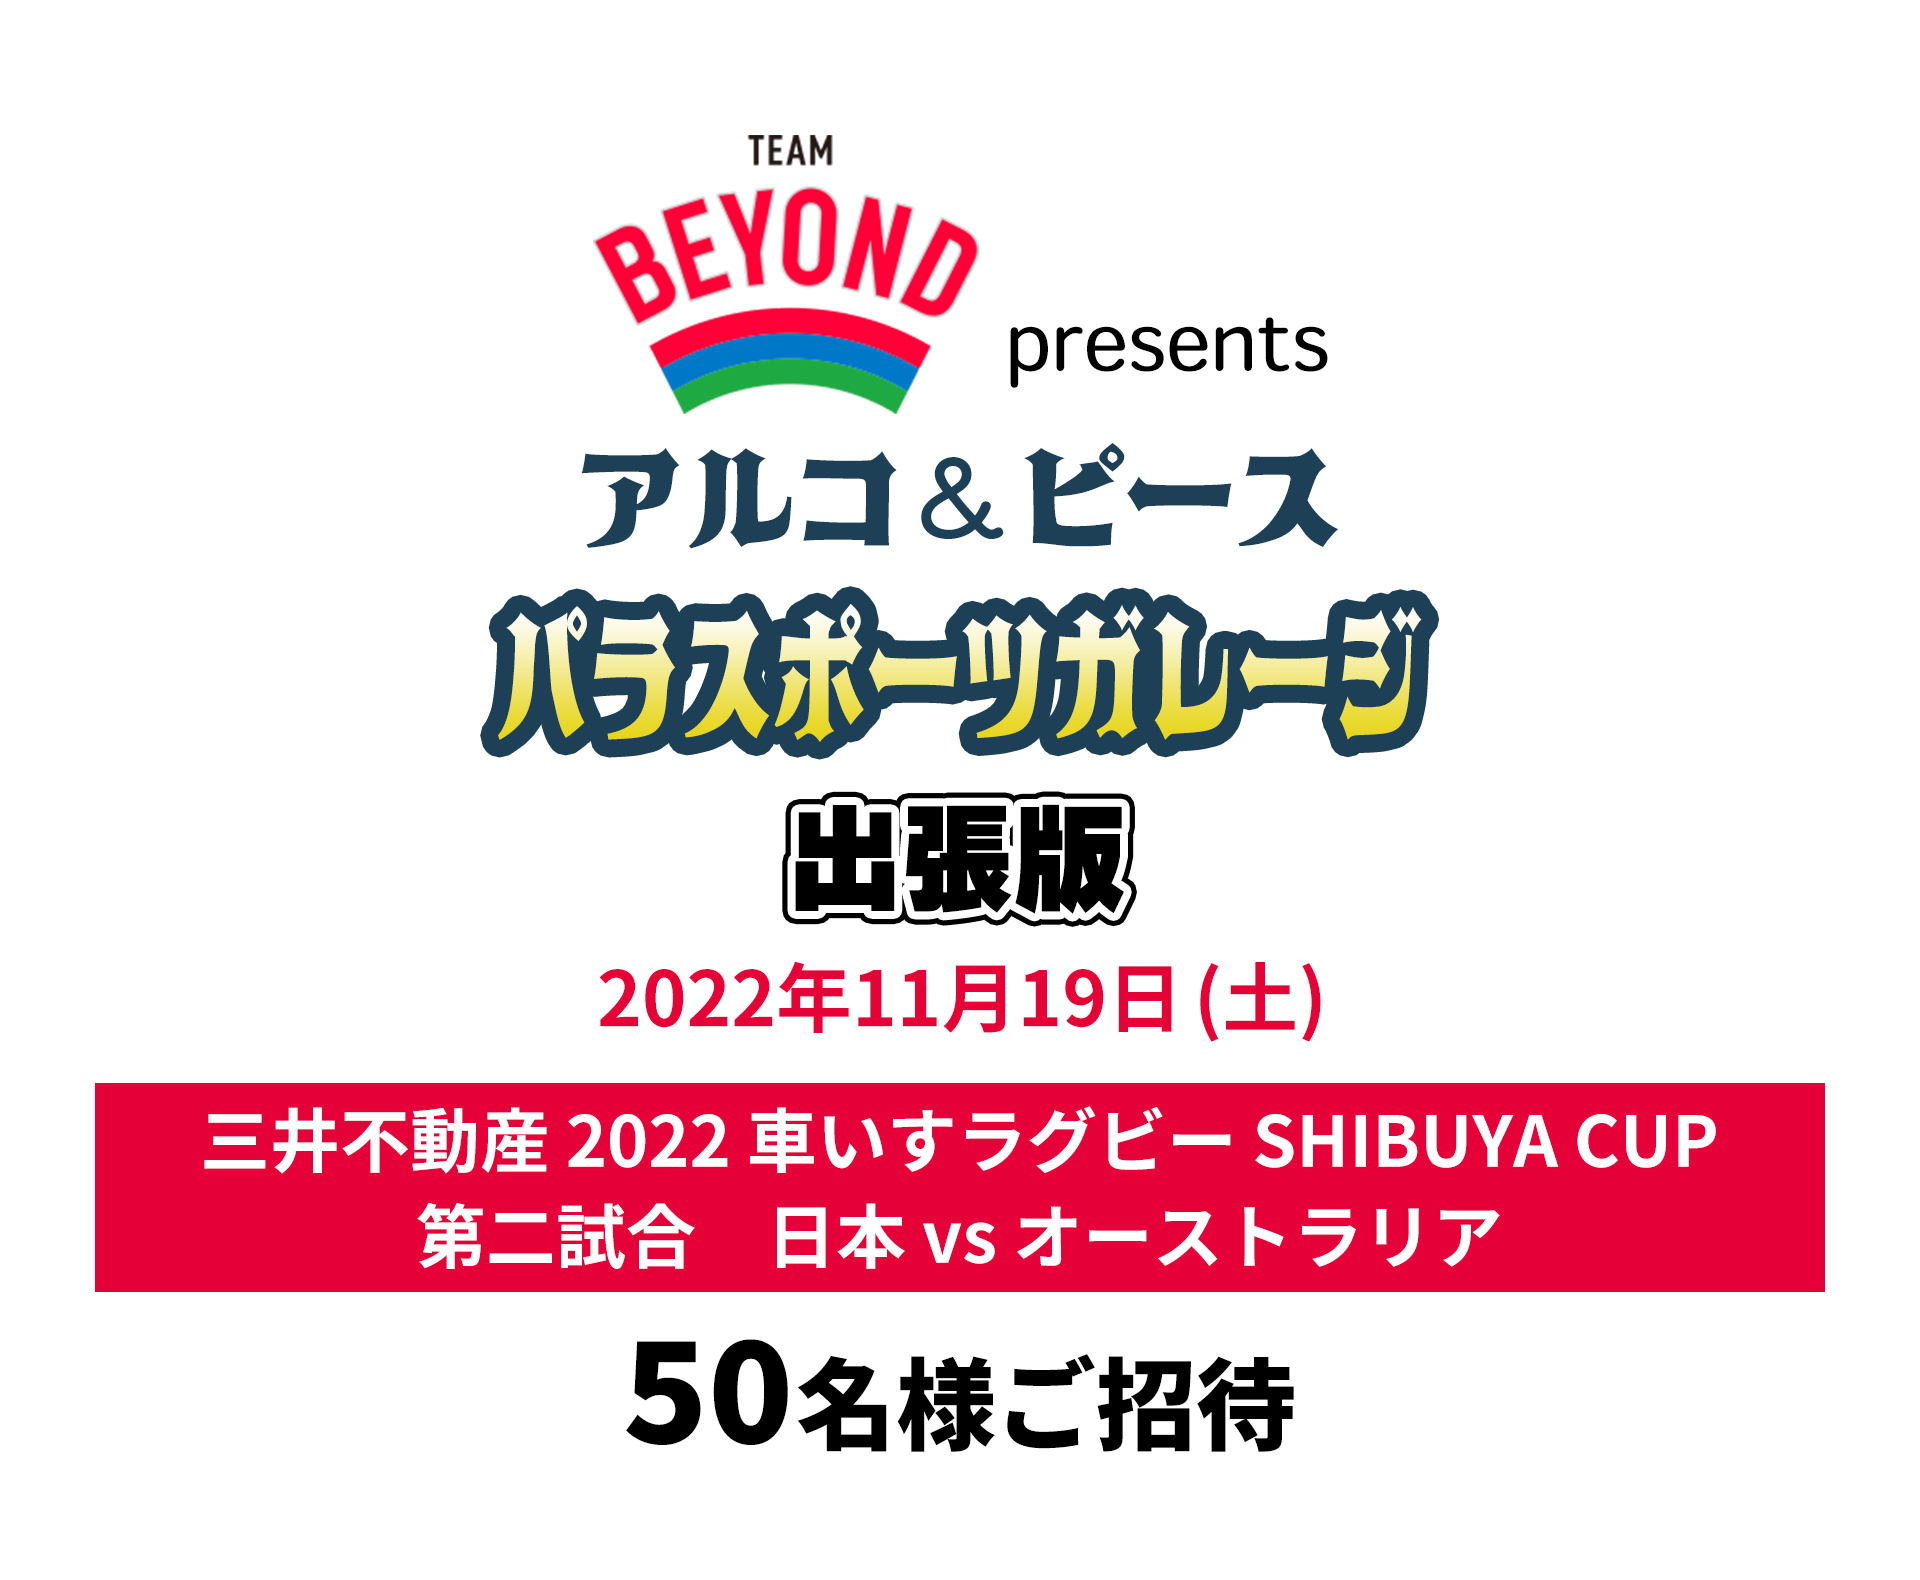 TEAM BEYOND presents アルコ&ピース  パラスポーツガレージ出張版<br>「三井不動産 2022 車いすラグビー SHIBUYA CUP 第二試合 日本 vs オーストラリア」​観戦会